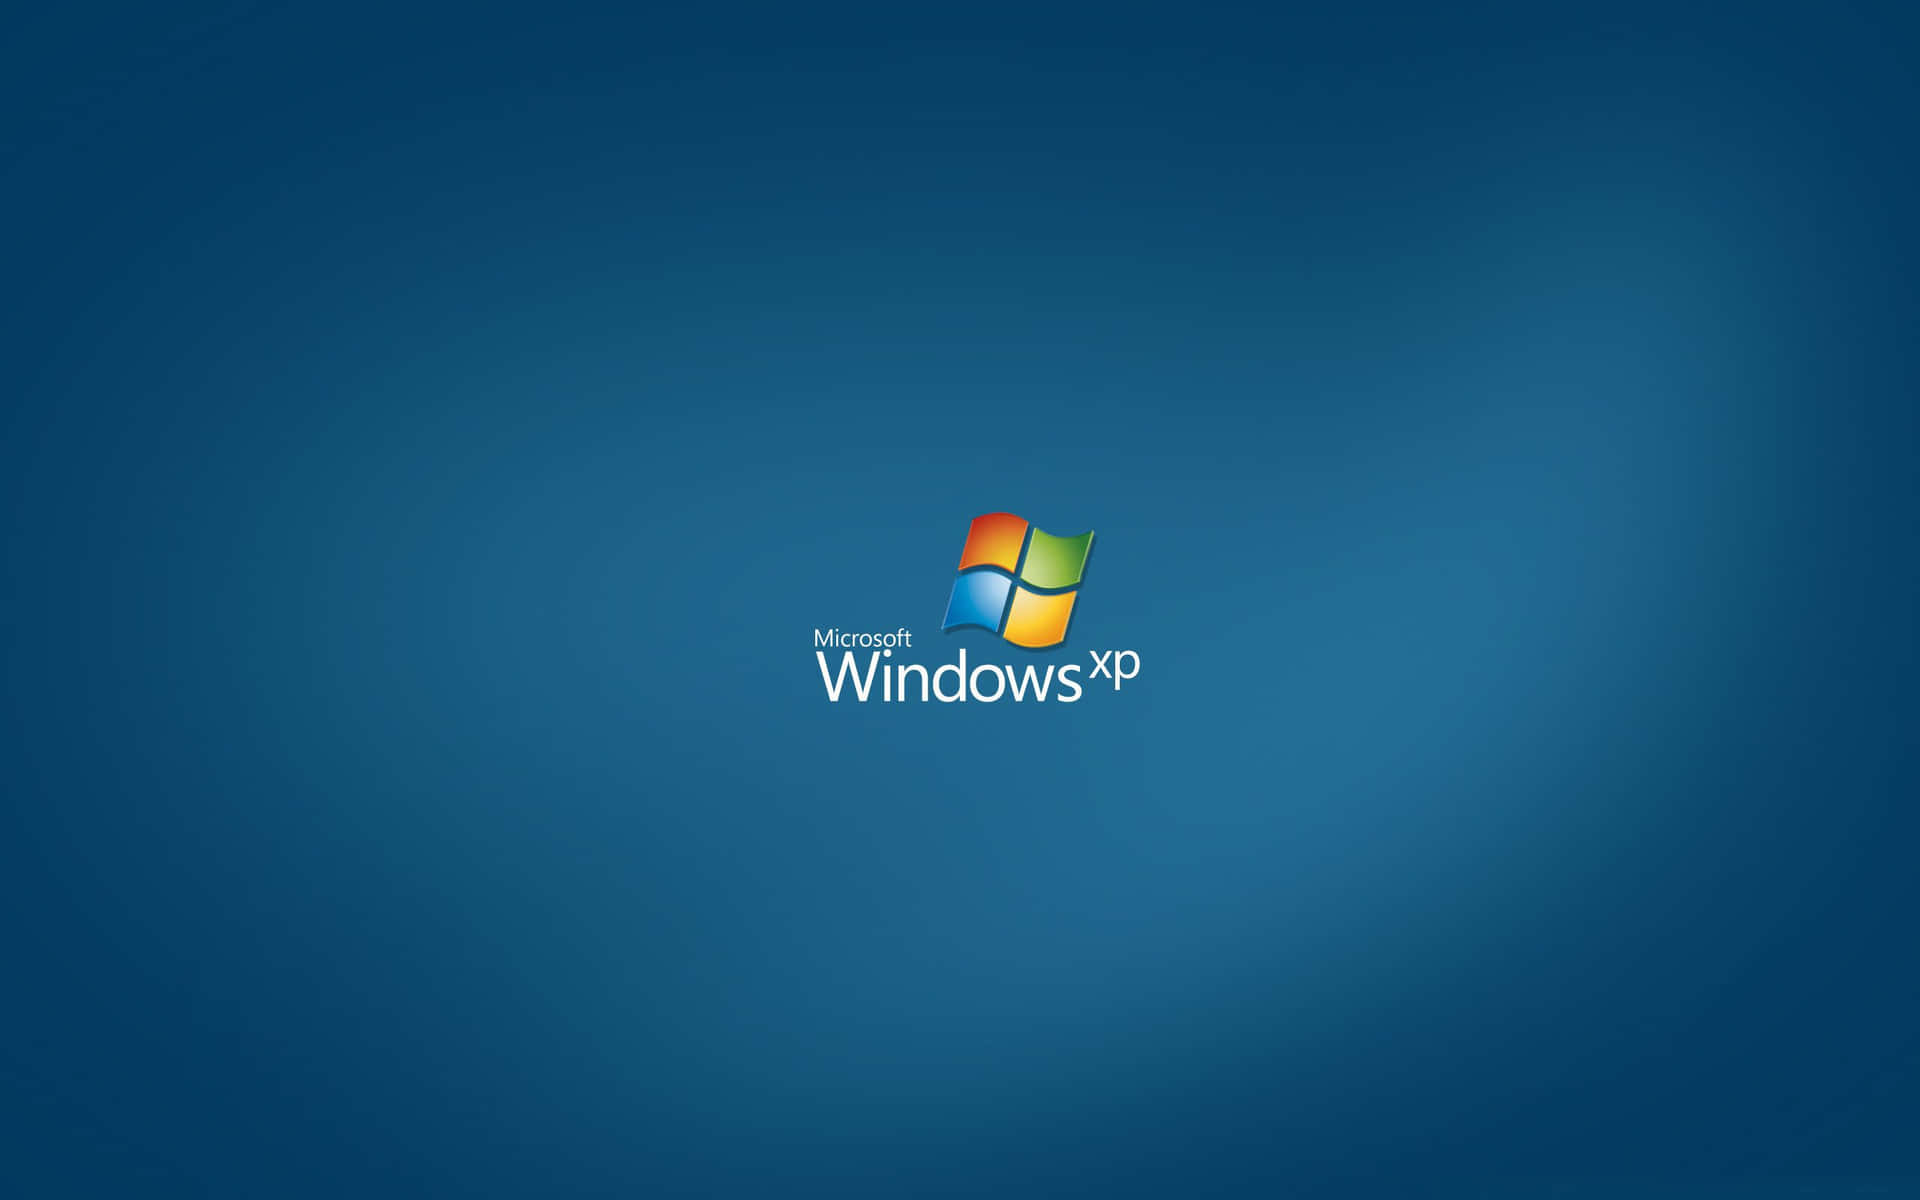 "Windows XP at its Best"